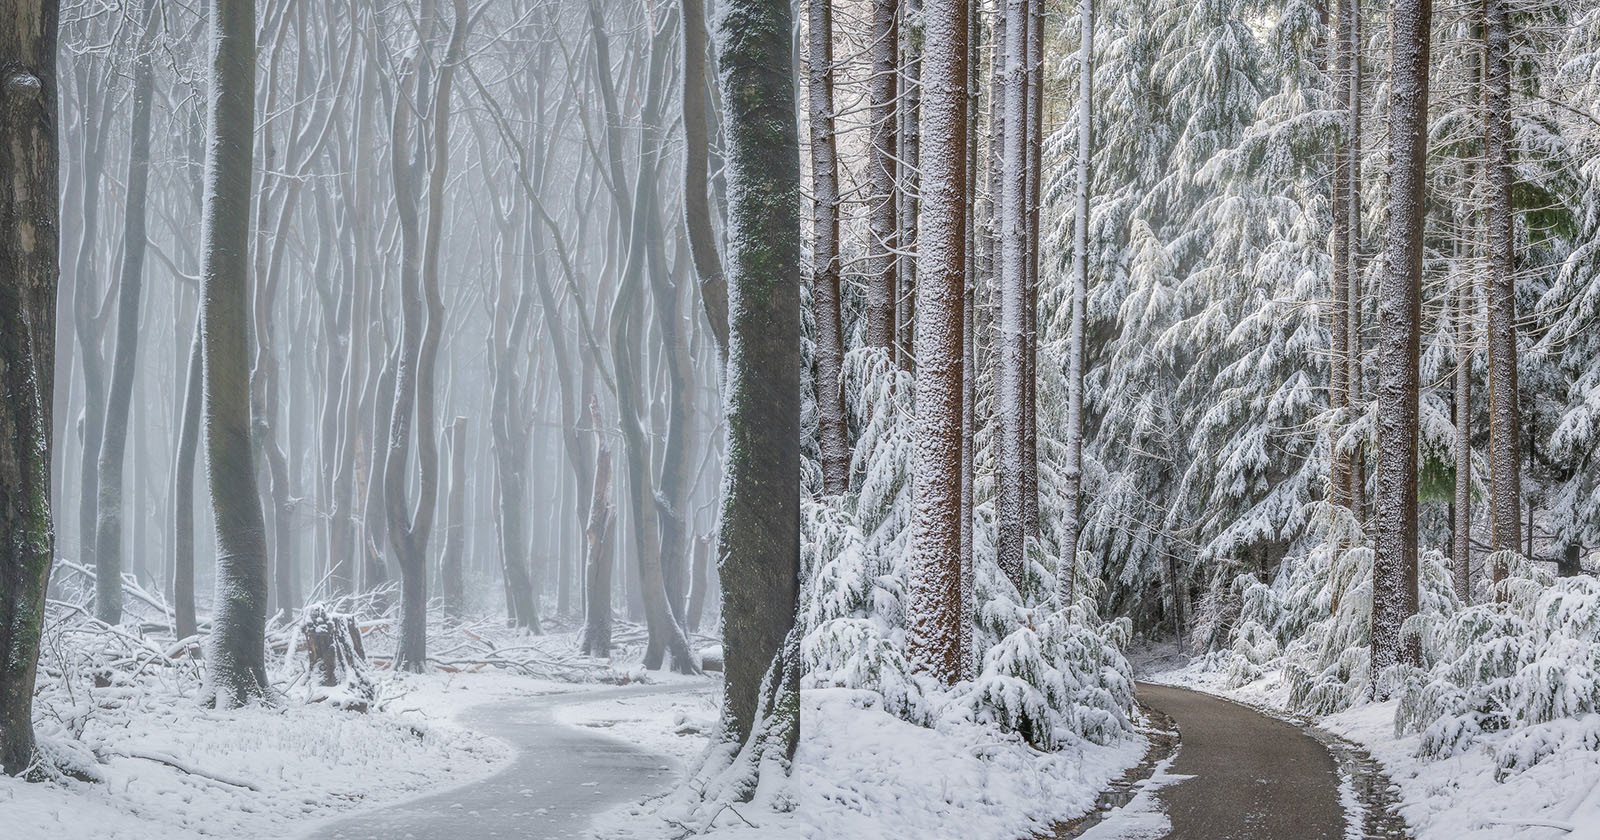  magical photos dutch forest covered rare spring snow 